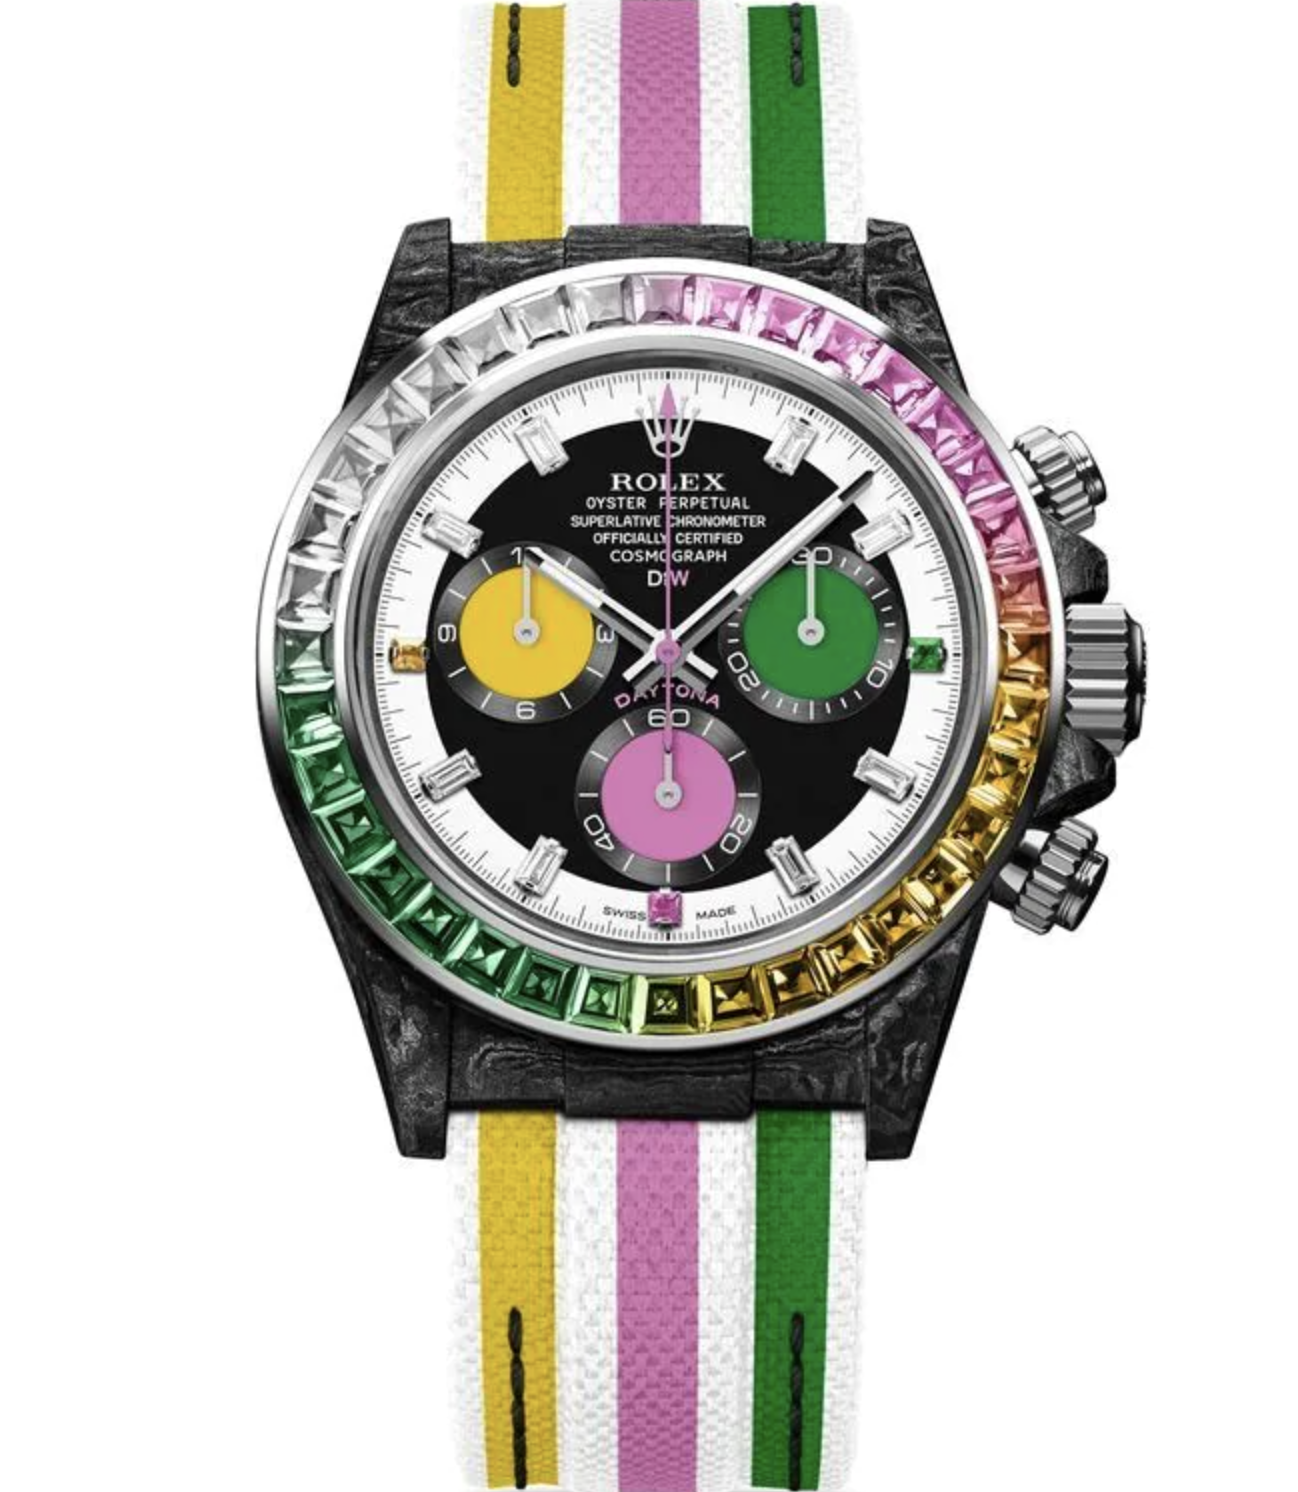 DiW (Designa Individual Watches) reloj Daytona